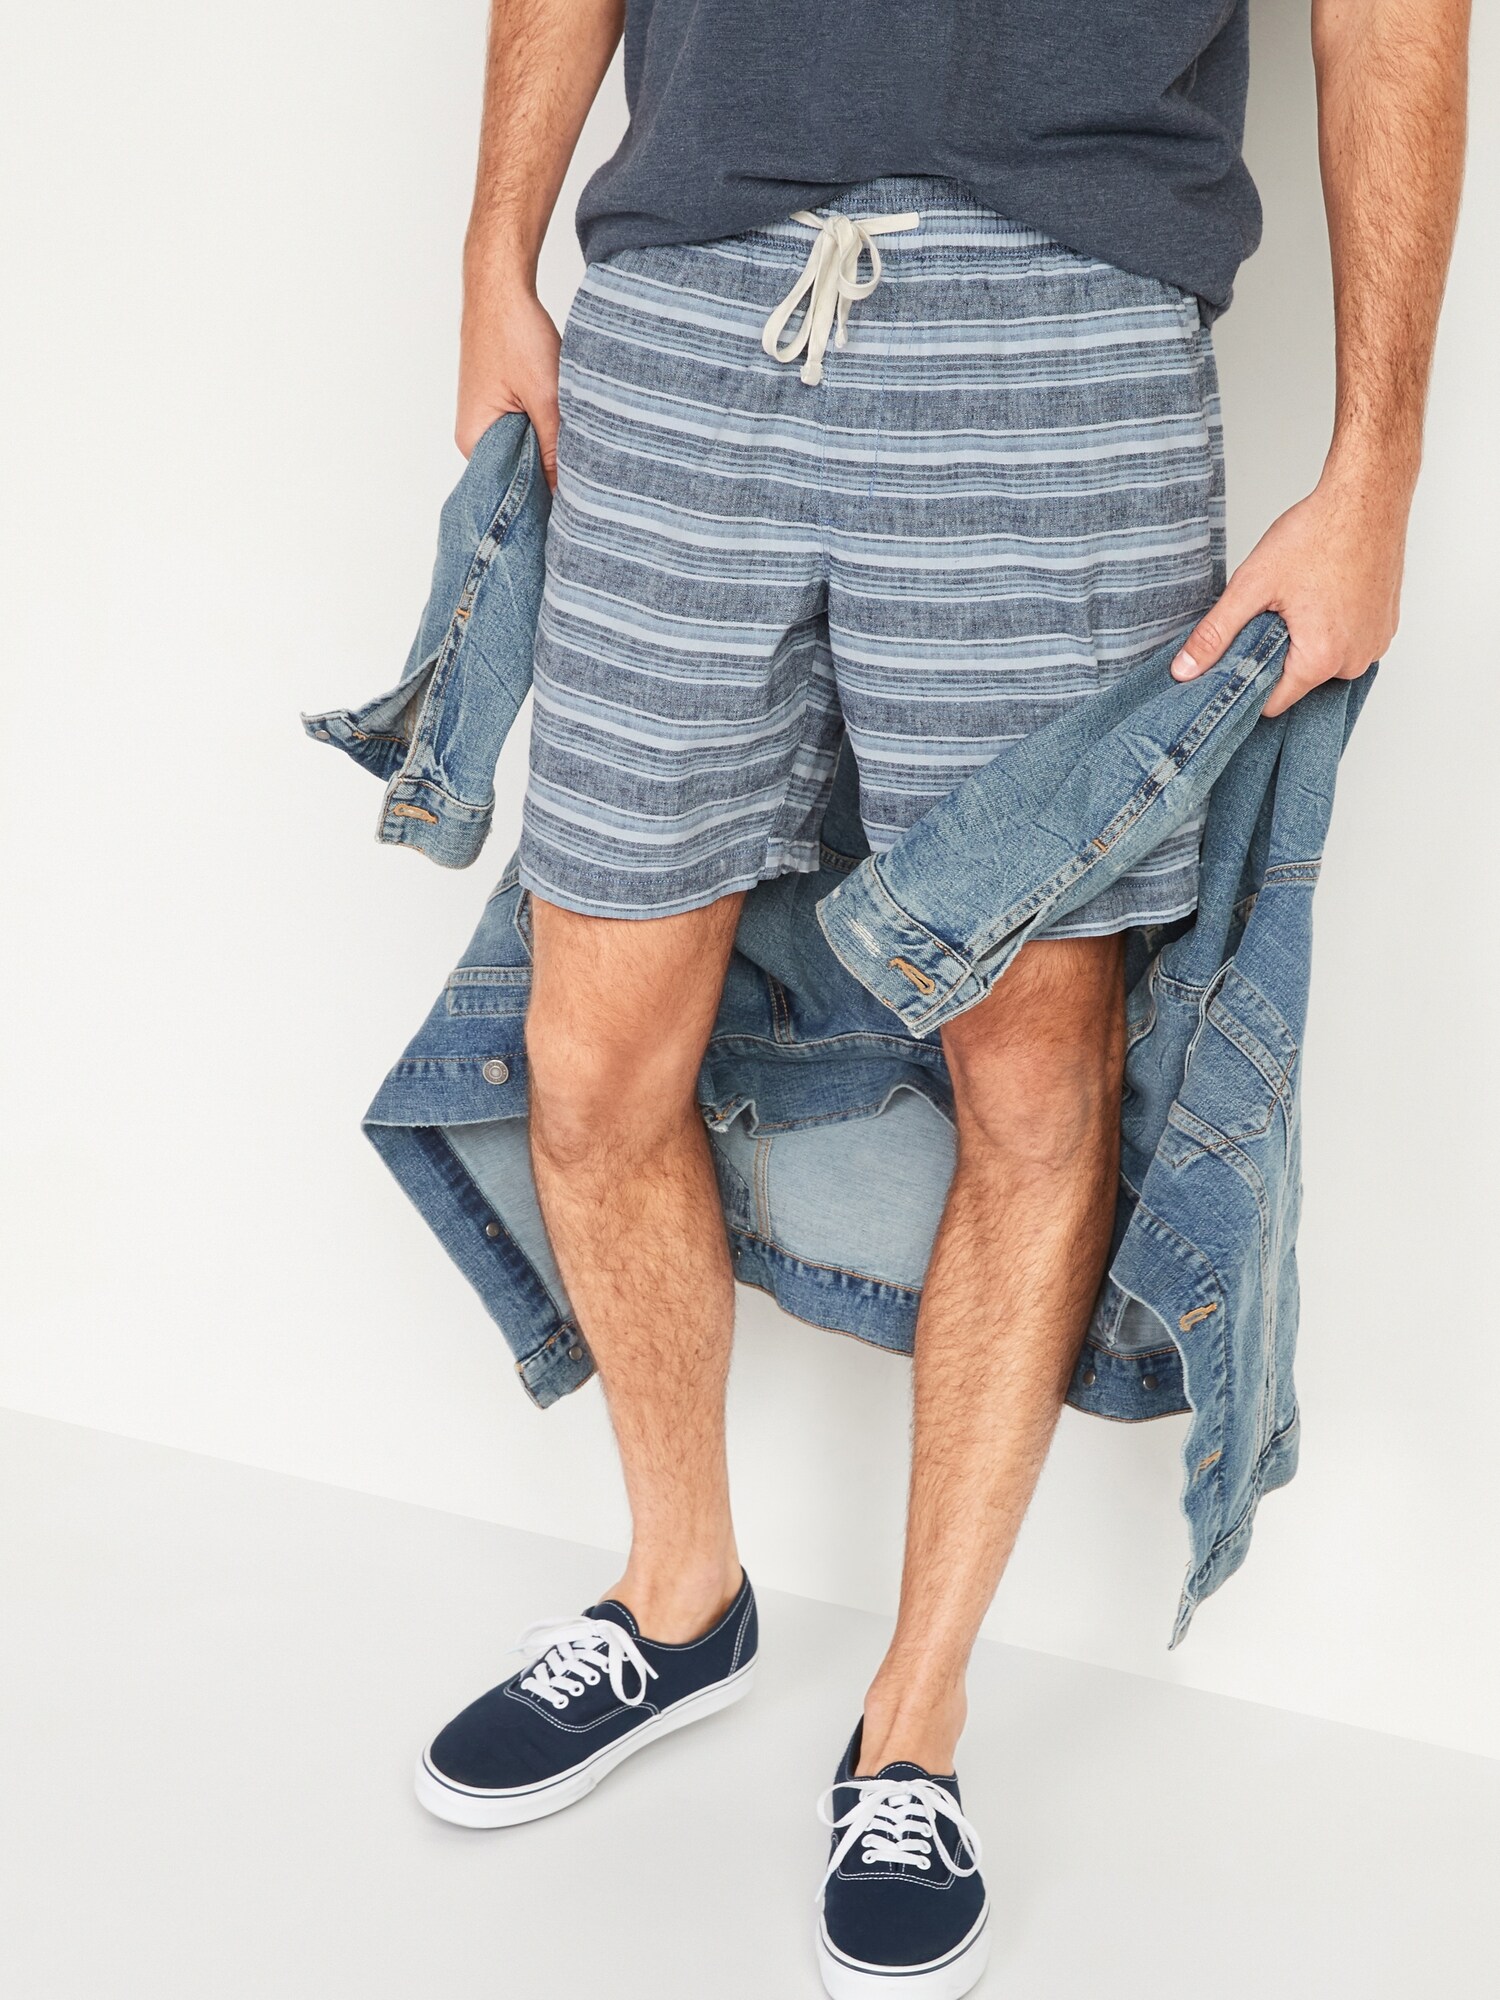 Striped Linen-Blend Jogger Shorts for Men -- 9-inch inseam